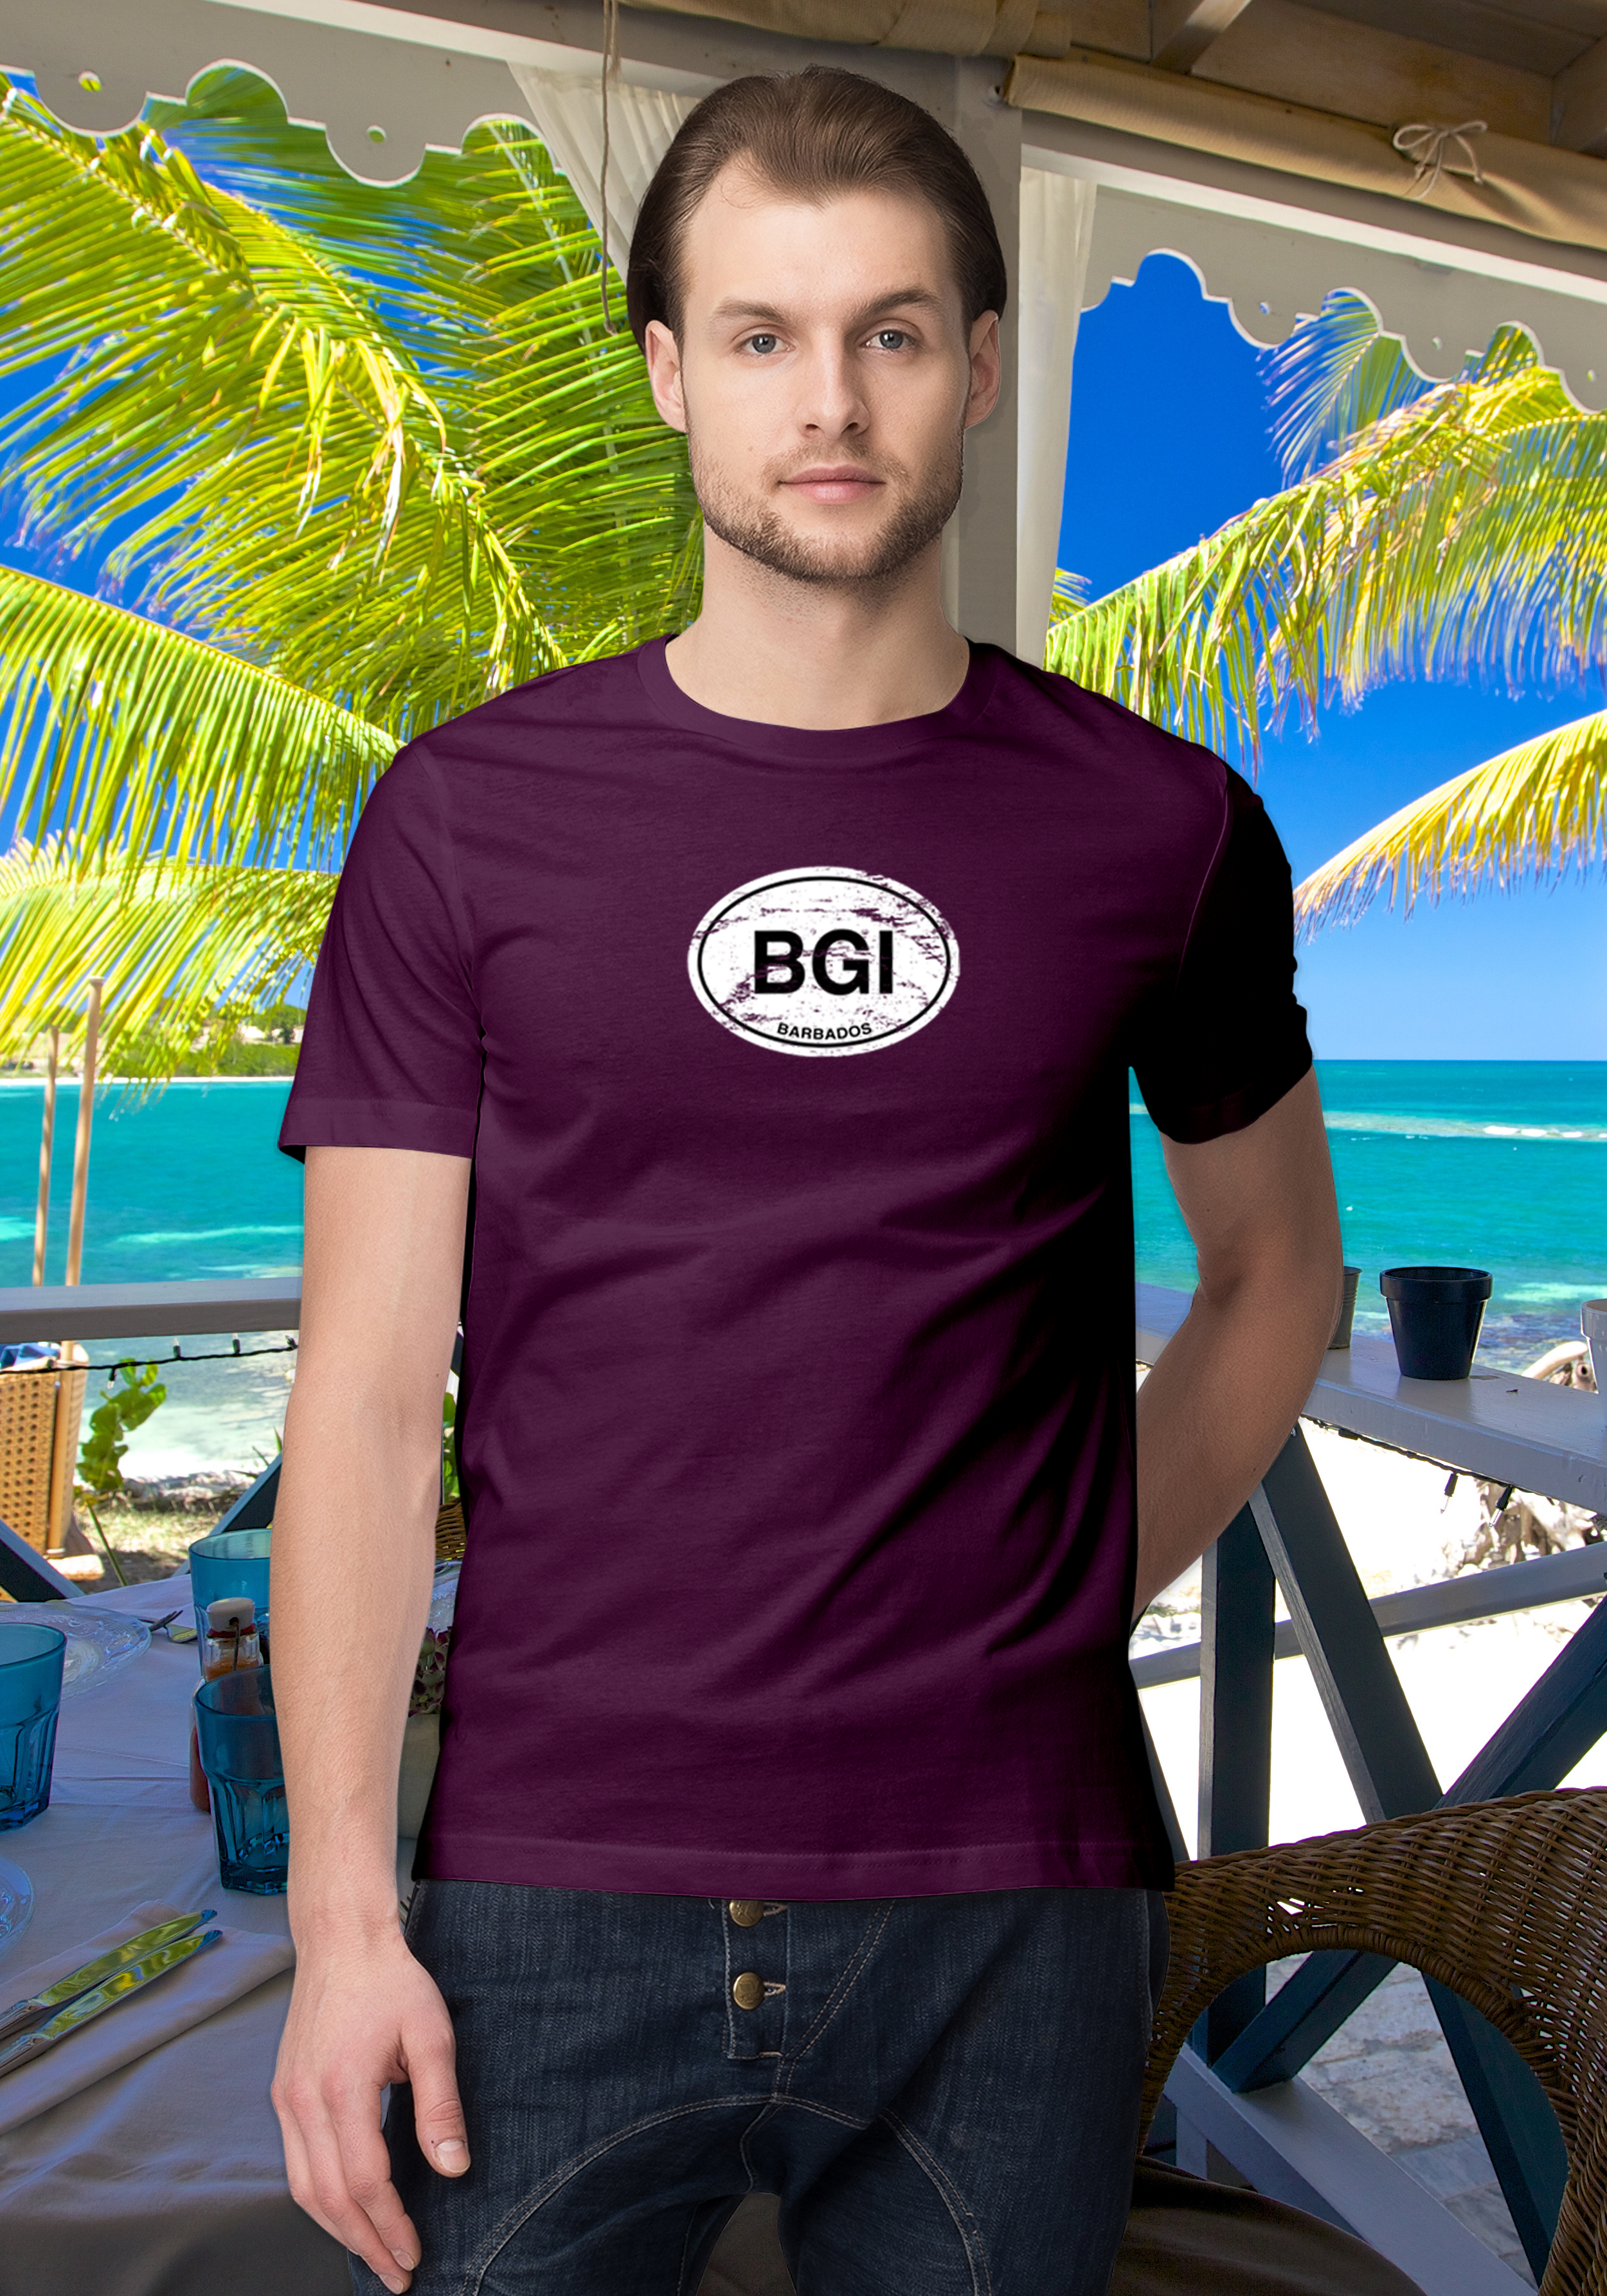 Barbados Men's Classic T-Shirt Souvenirs - My Destination Location